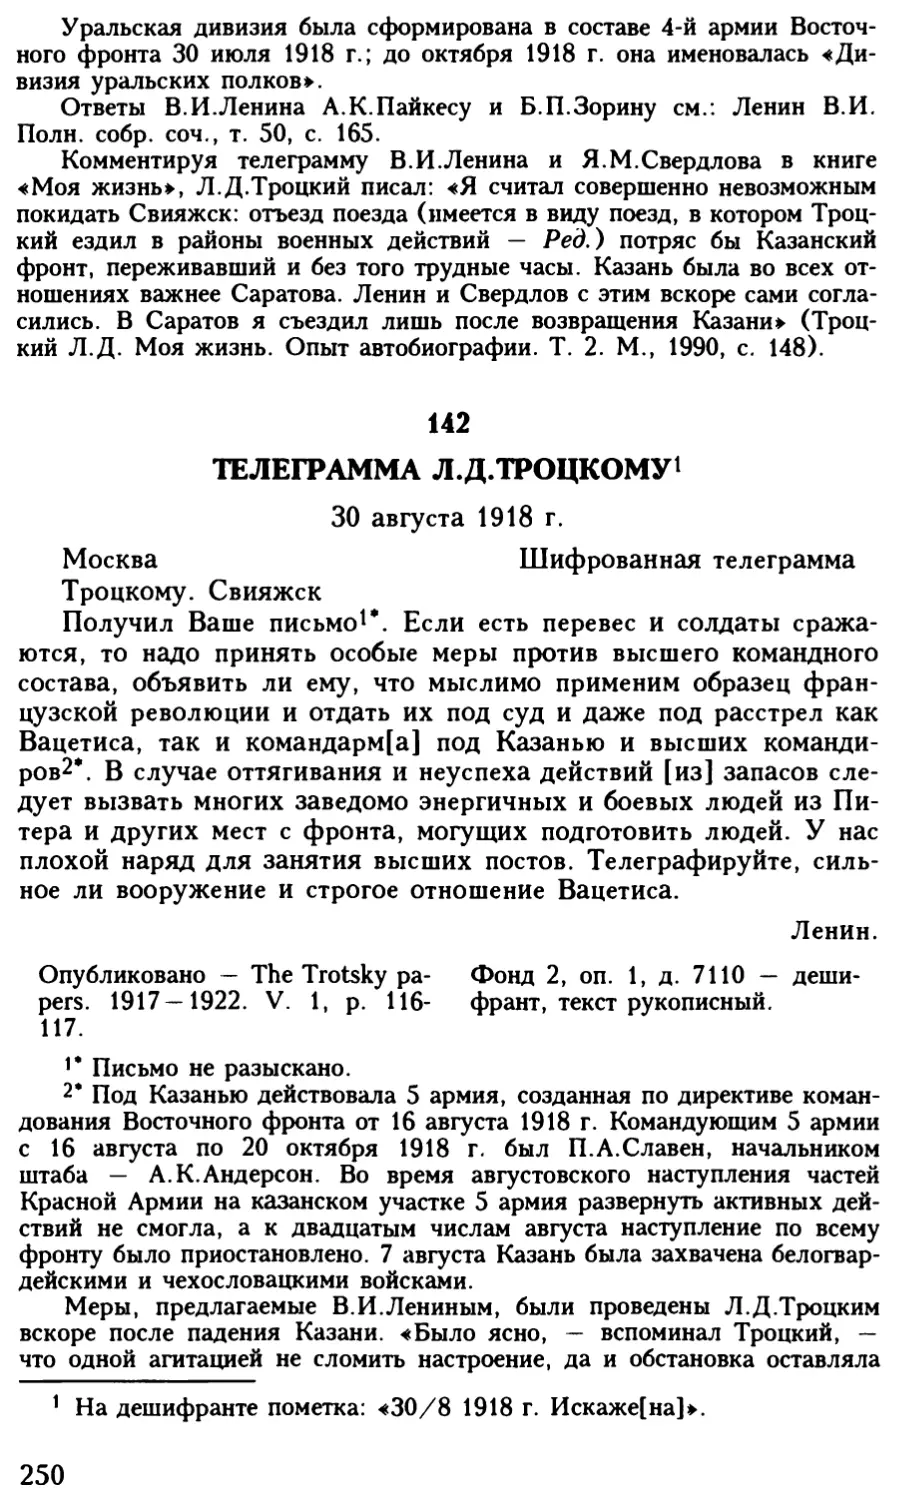 142. Телеграмма Л.Д.Троцкому. 30 августа 1918 г